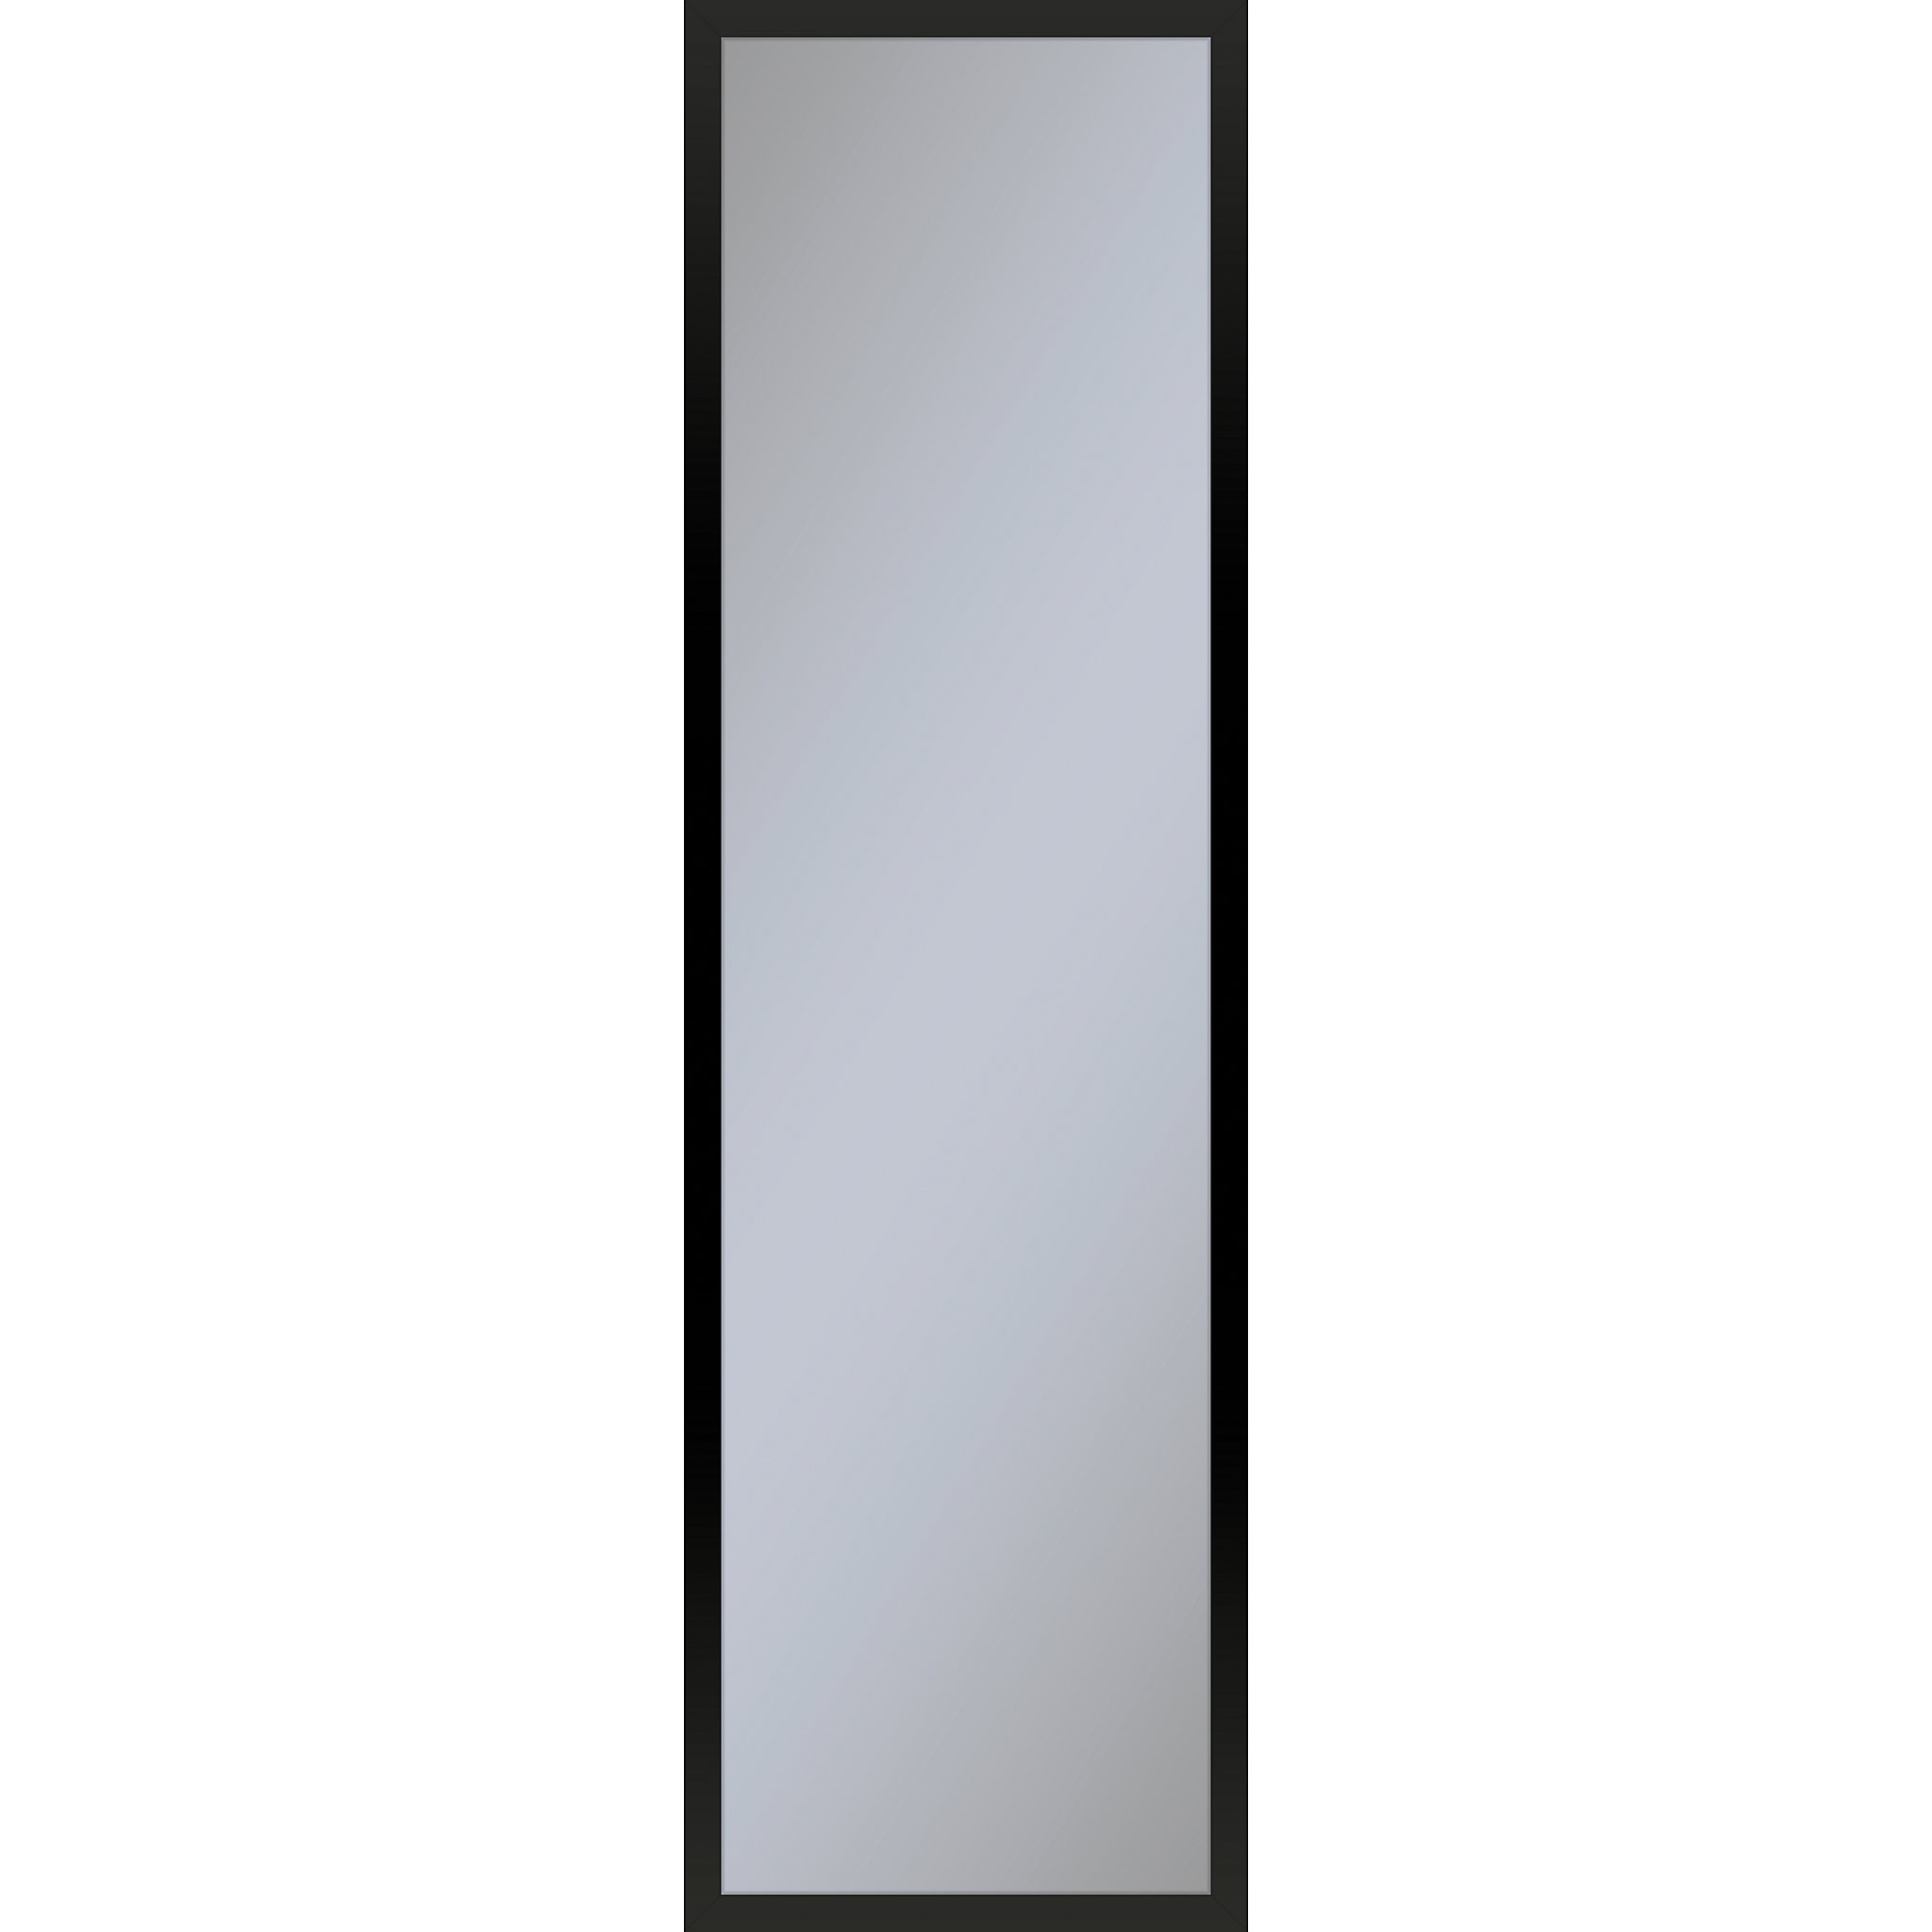 Robern PC1240D6TNN83 Profiles Framed Cabinet, 12" x 40" x 6", Matte Black, Non-Electric, Reversible Hinge